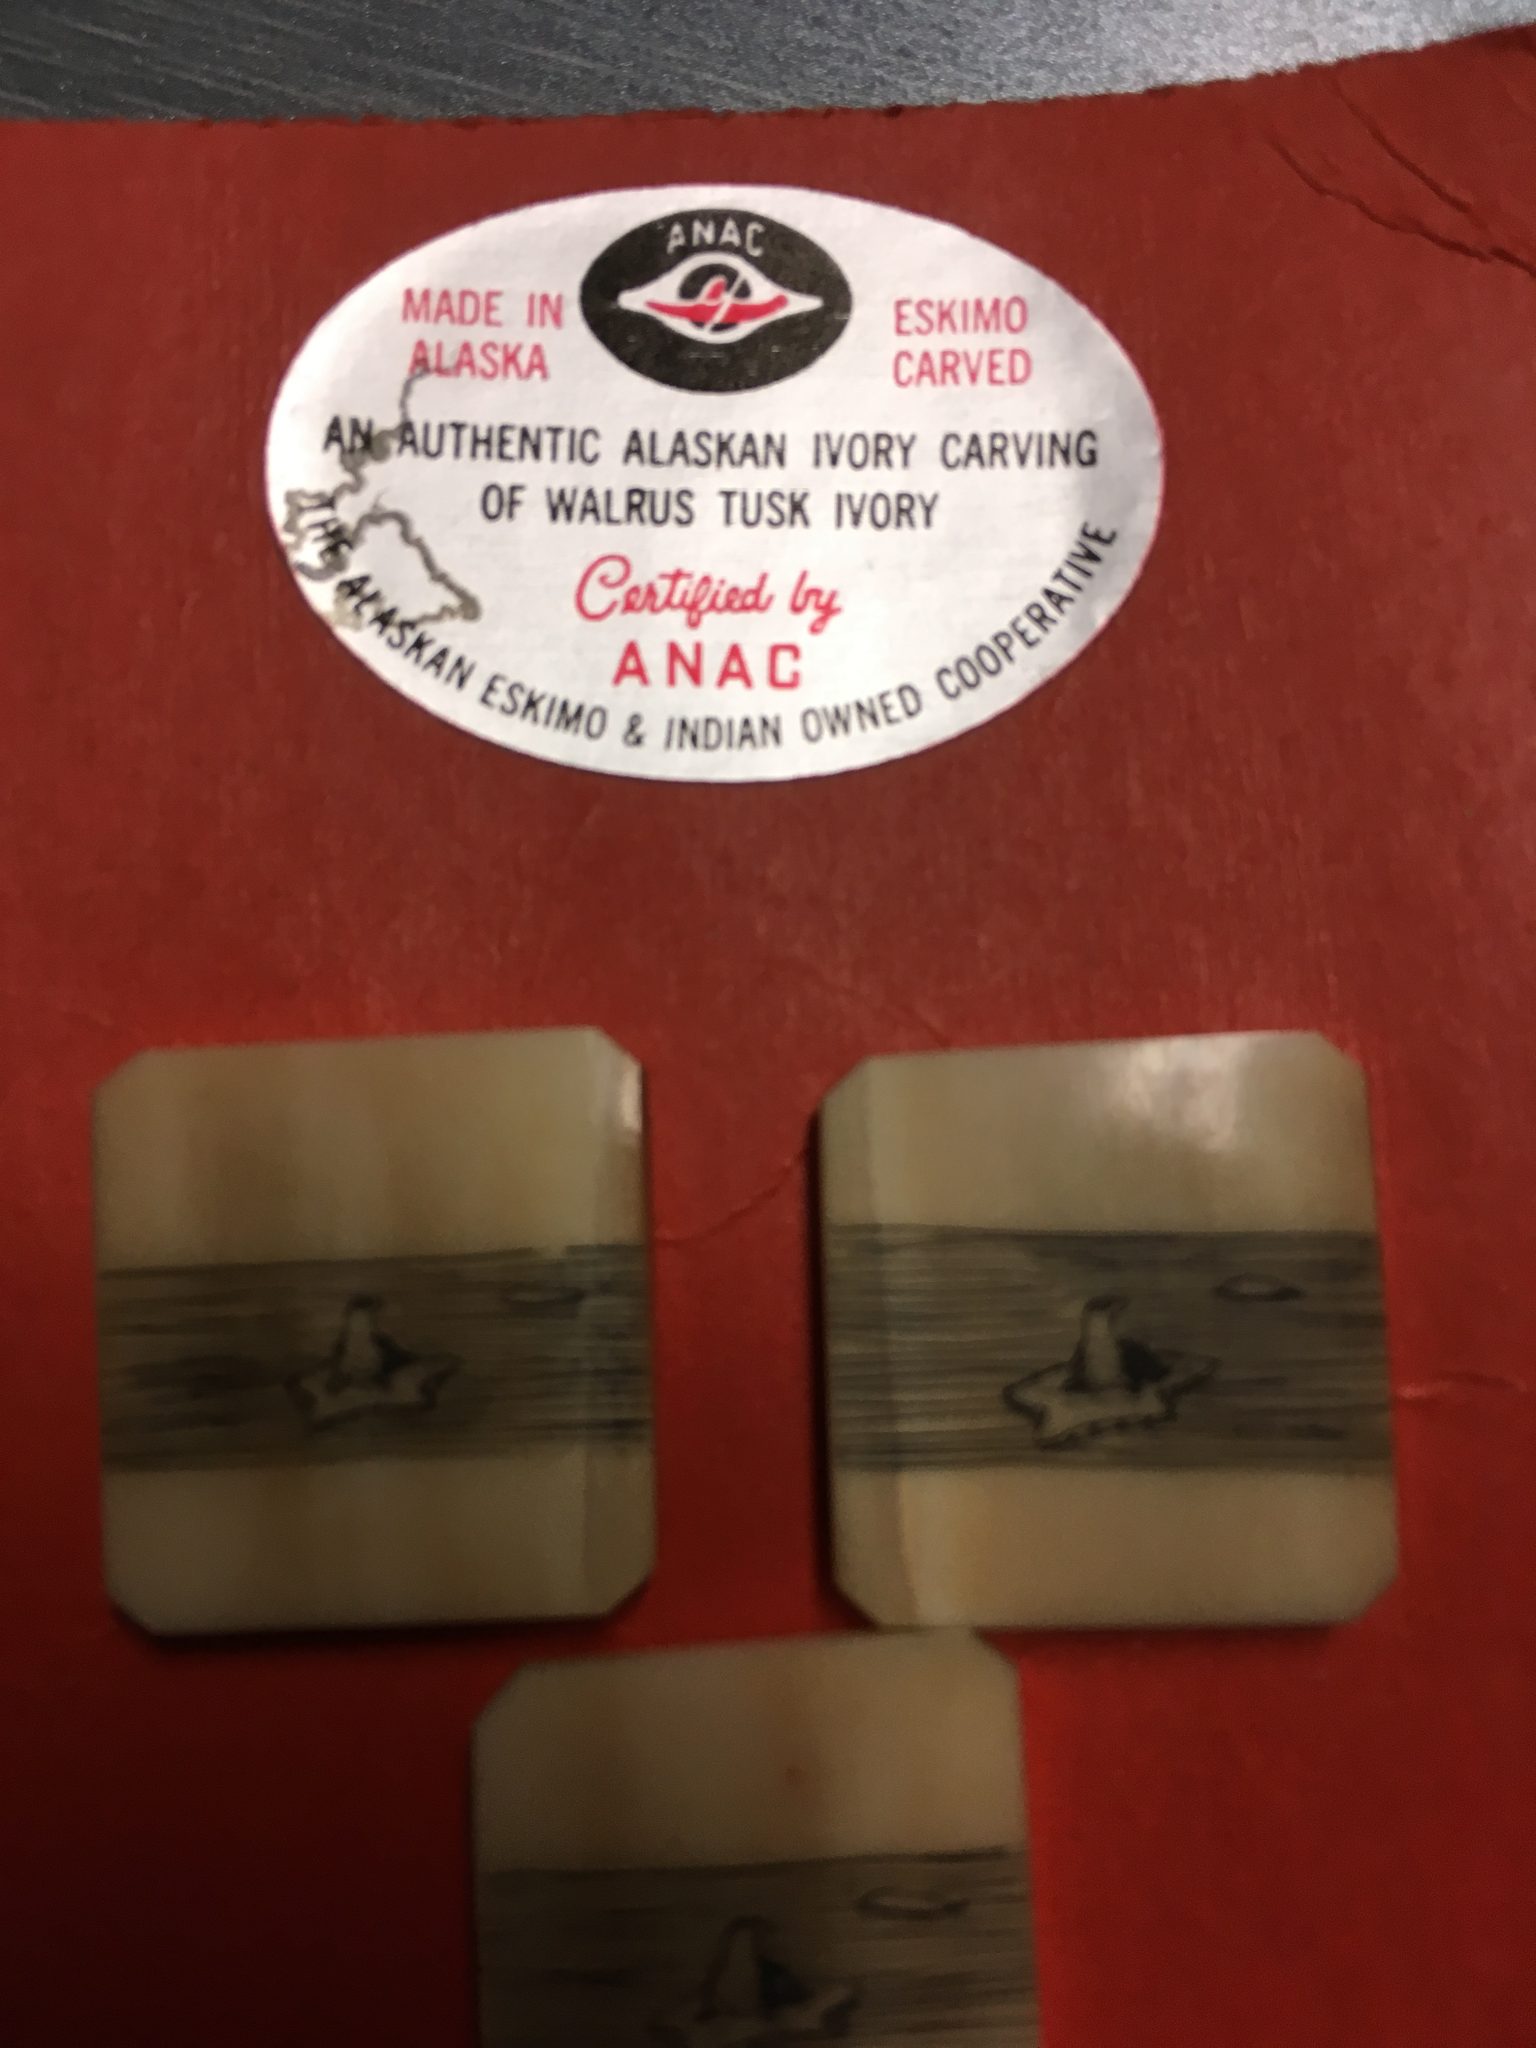 Walrus tusk ivory, label on original card